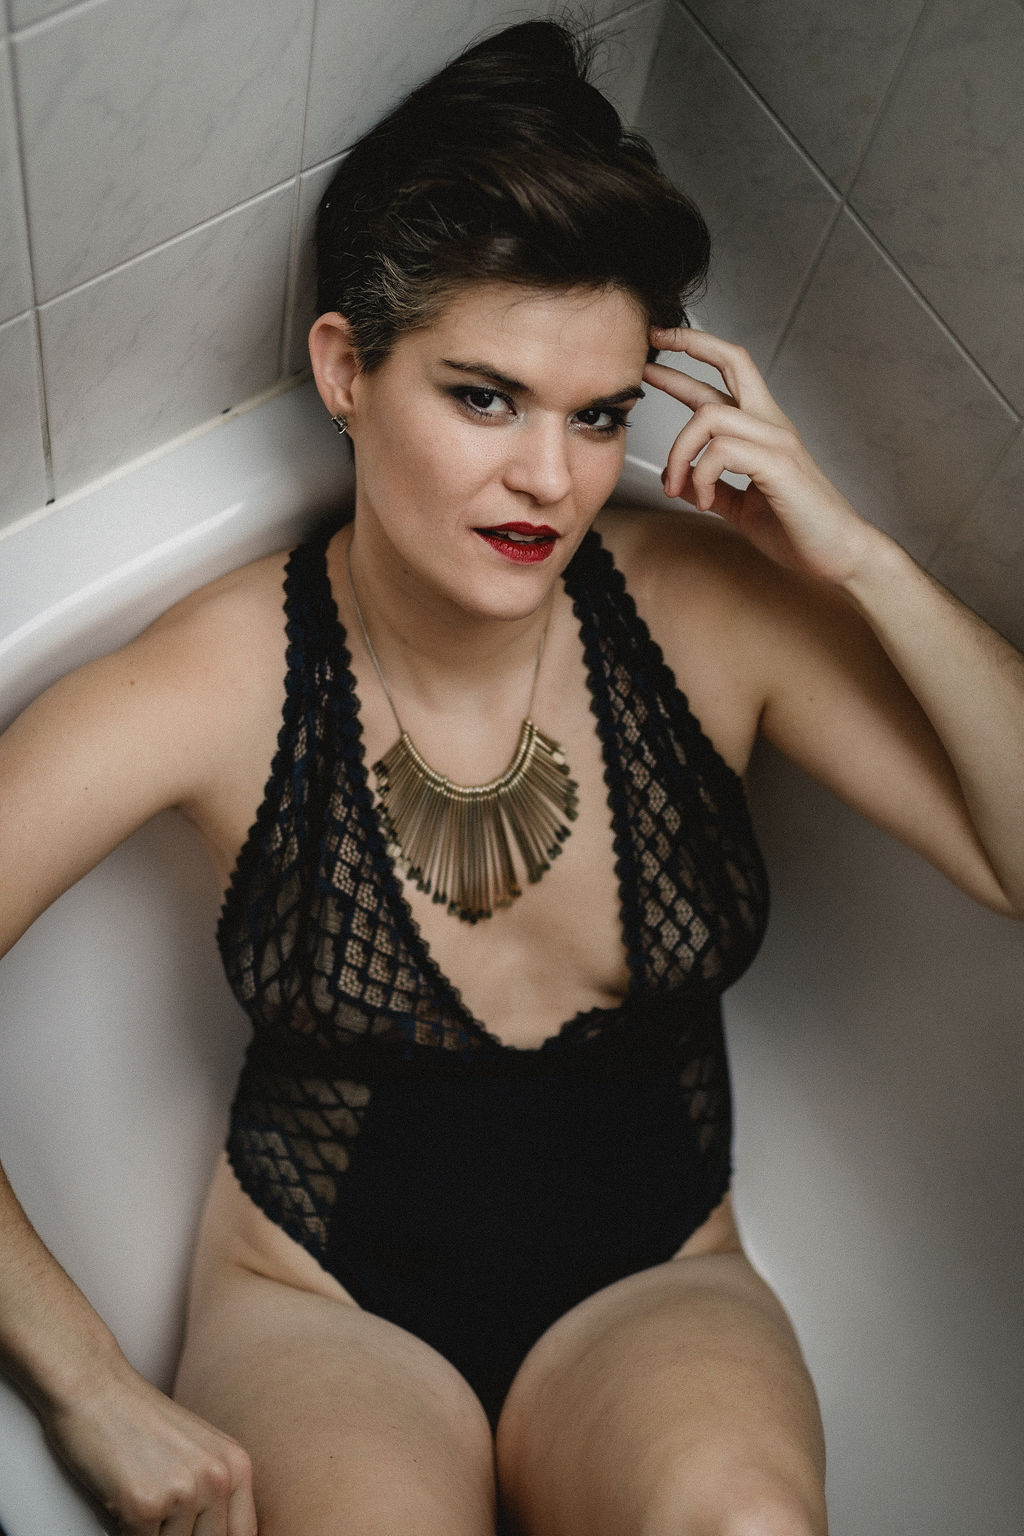 seance portrait dame dans une baignoire chloe sorbe photographe strasbourg1